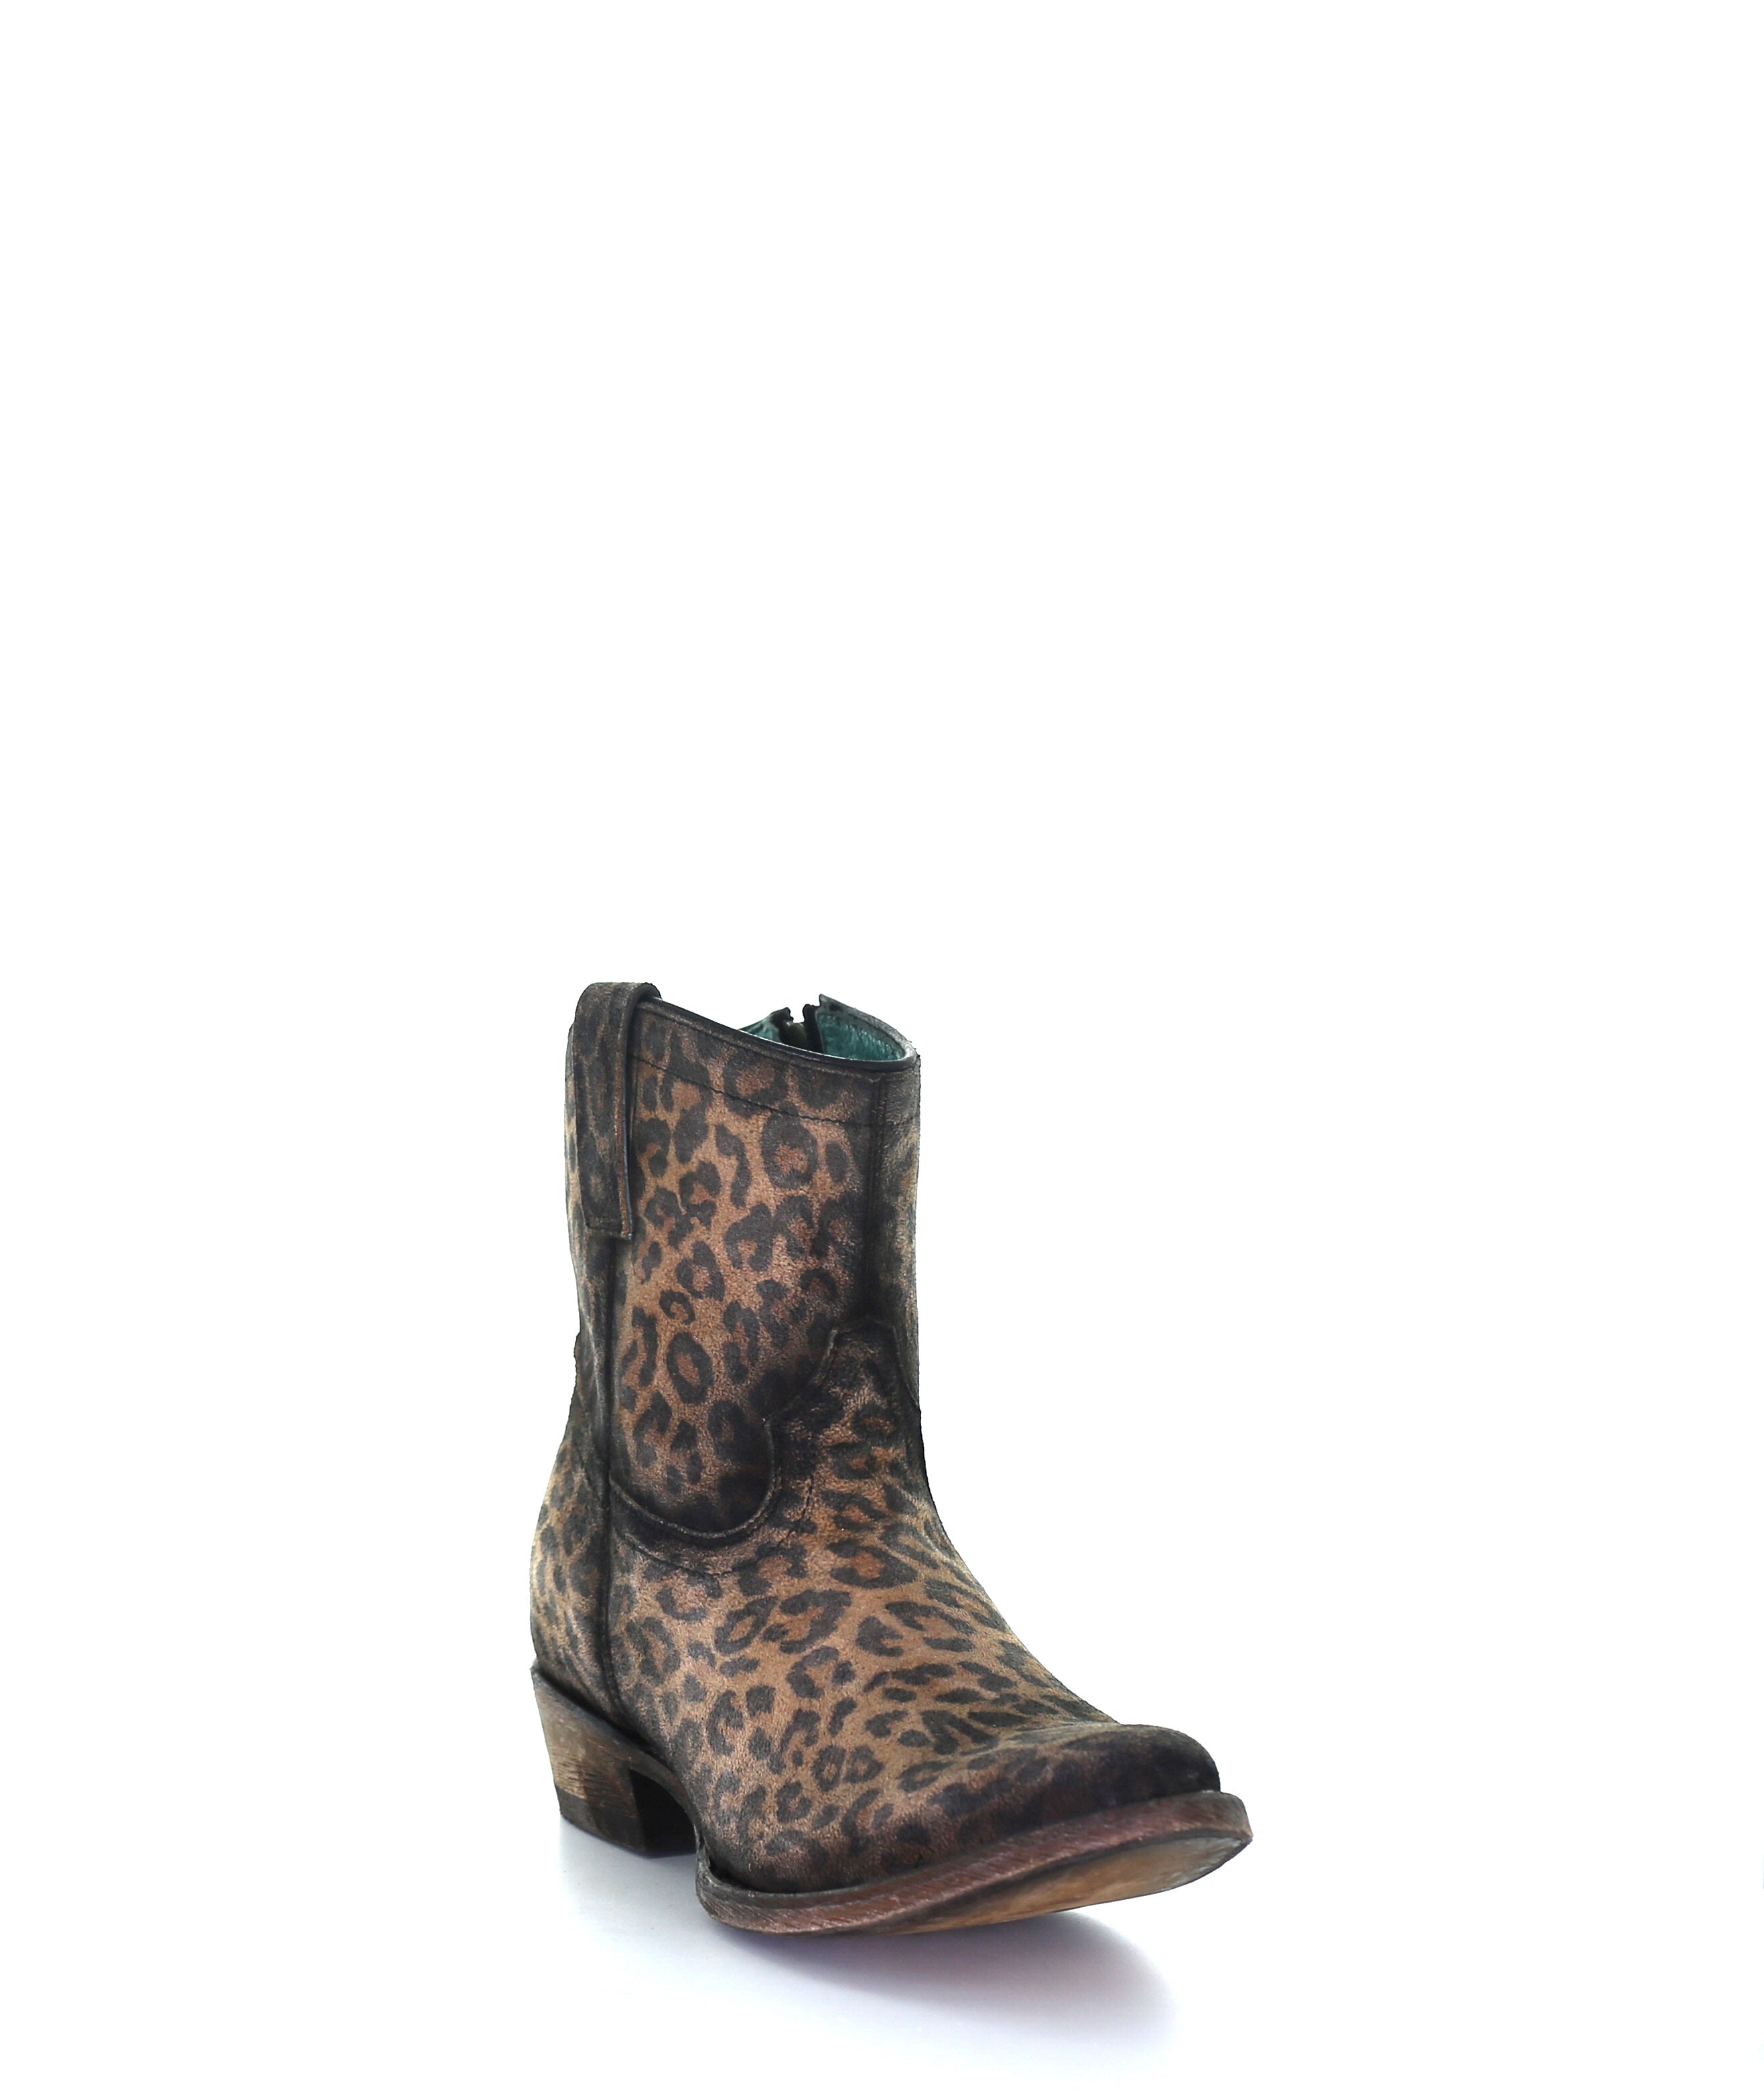 Ladies Leopard Print Zipper Ankle Boot